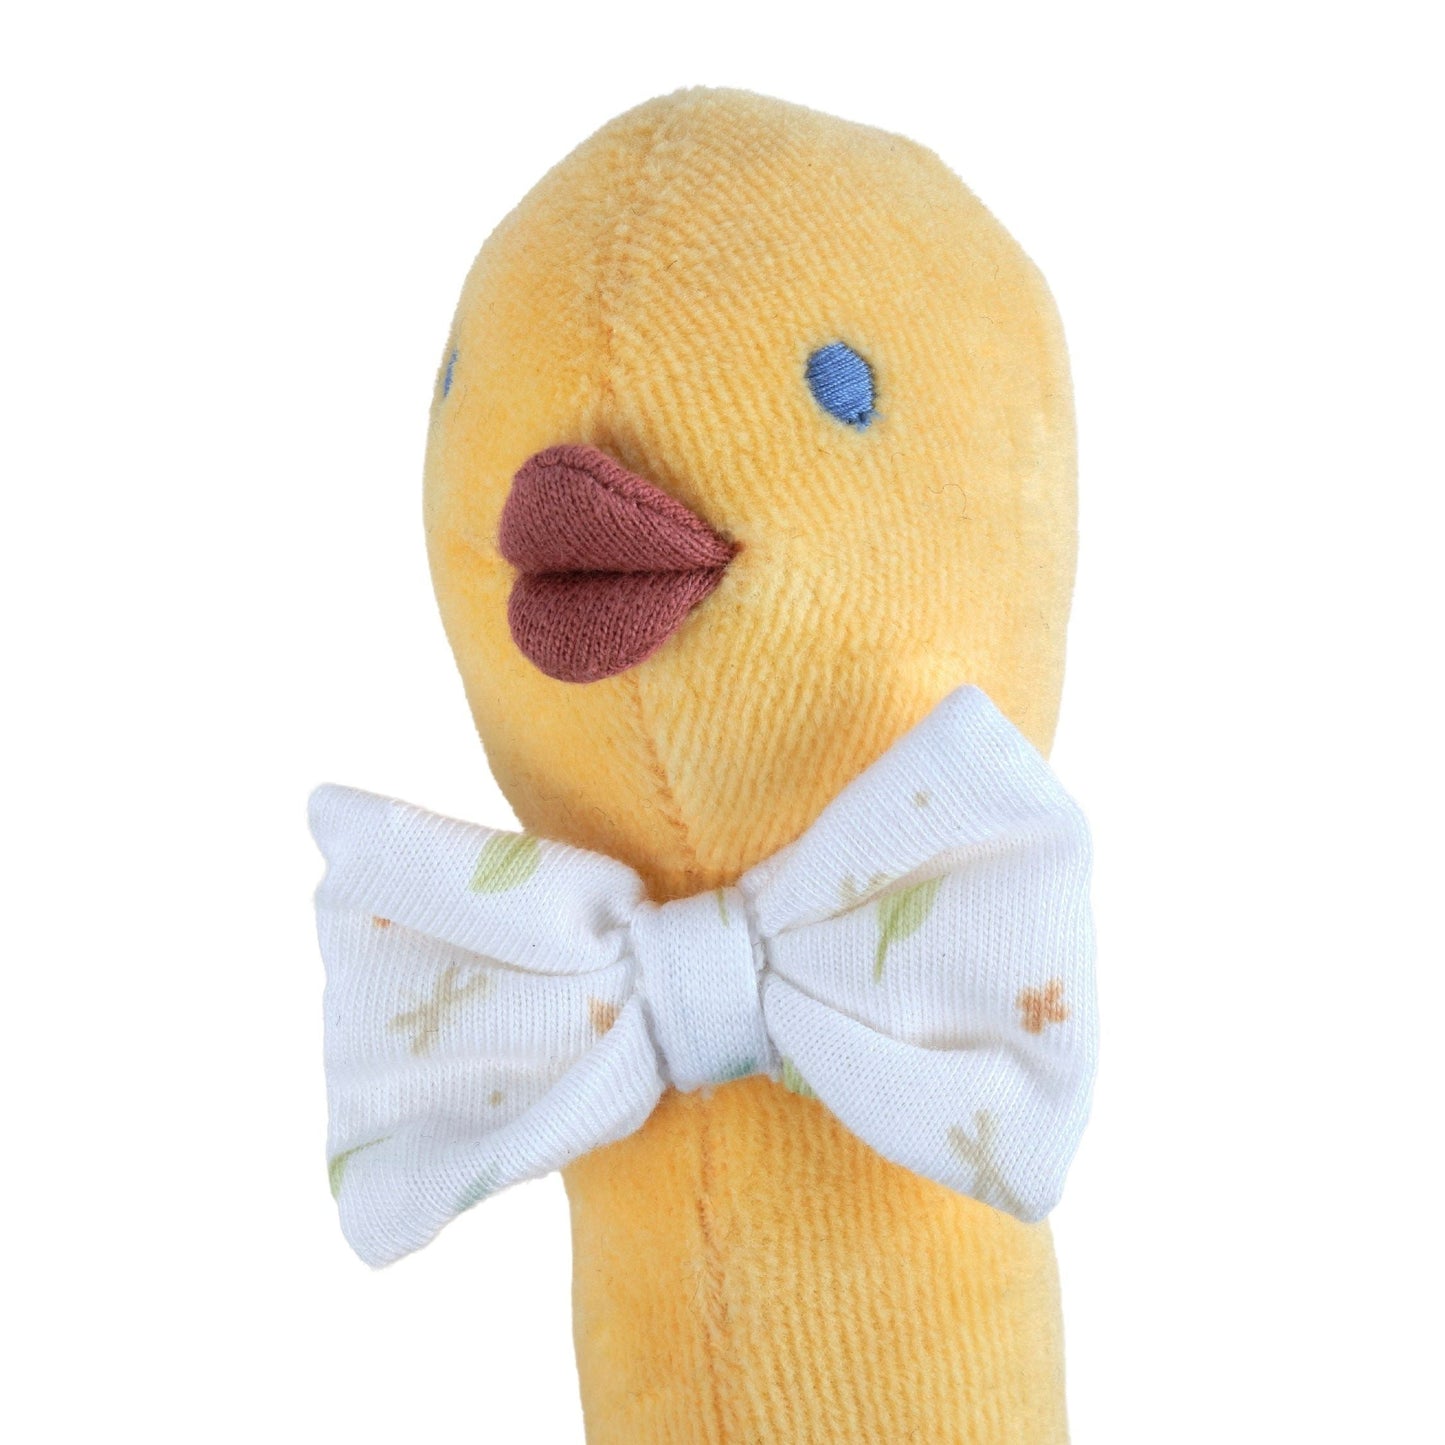 Tara the Duck - Baby Squeaker Toy